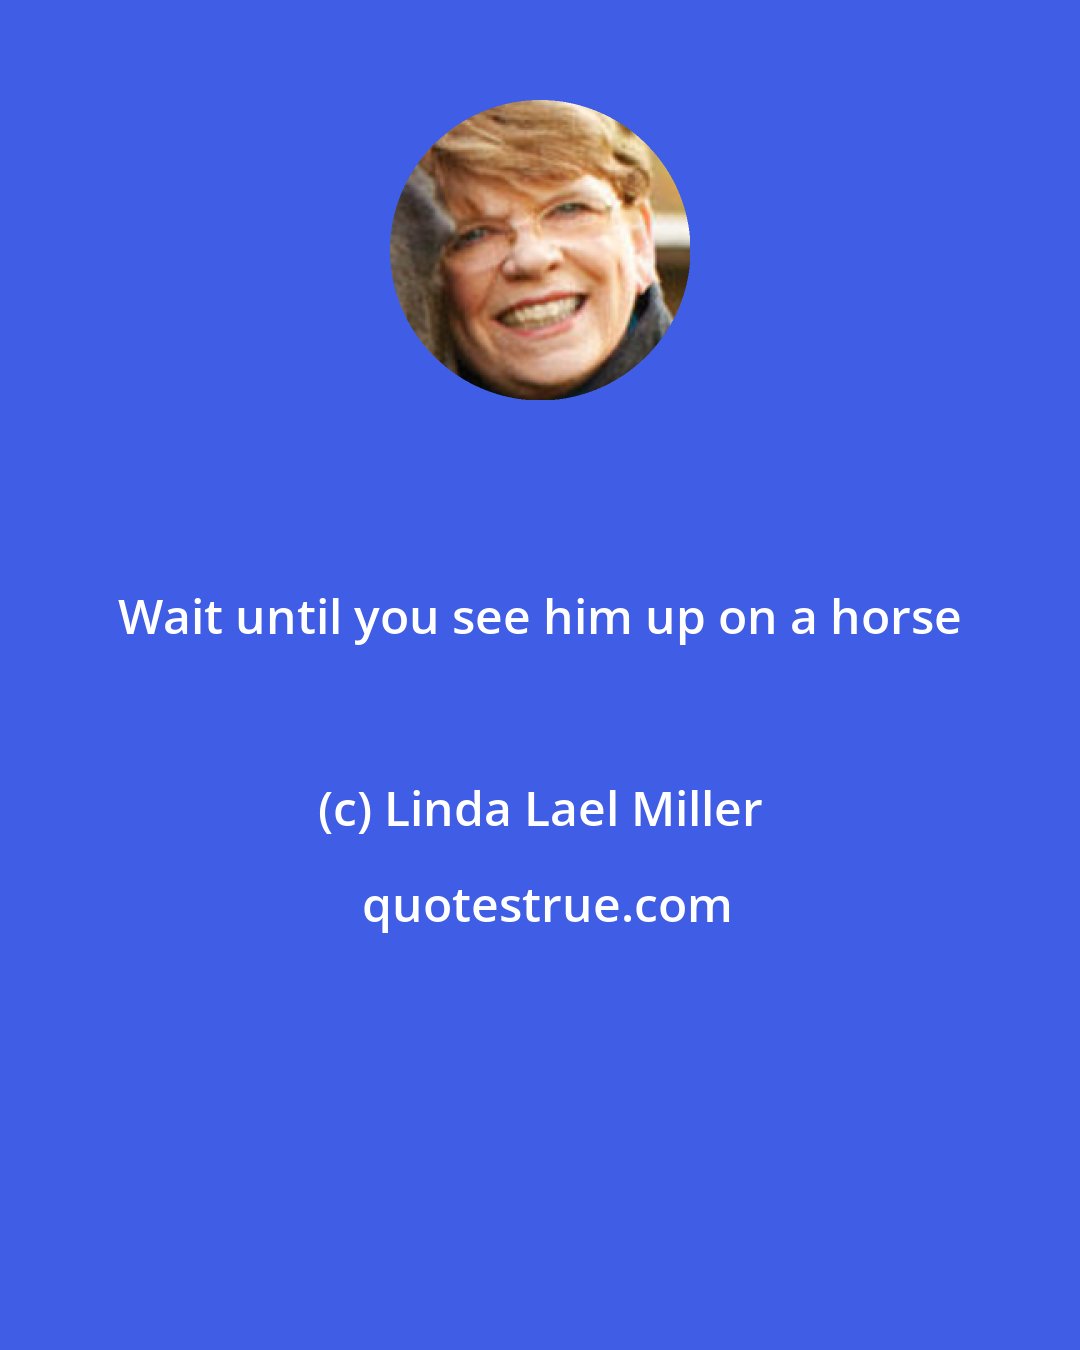 Linda Lael Miller: Wait until you see him up on a horse